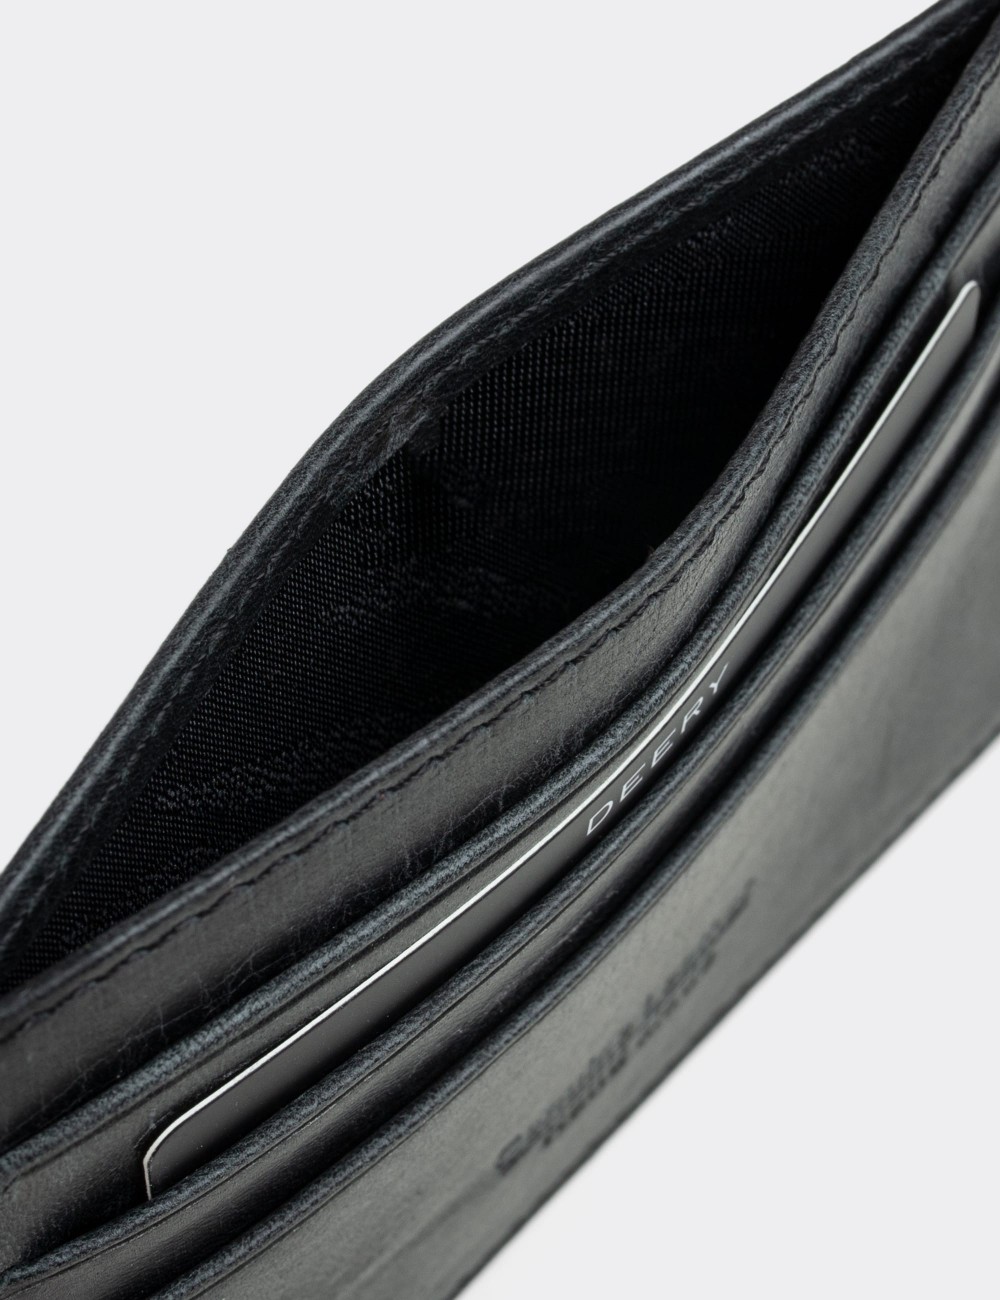  Leather Black Men's Wallet - 0588CMSYHZ01